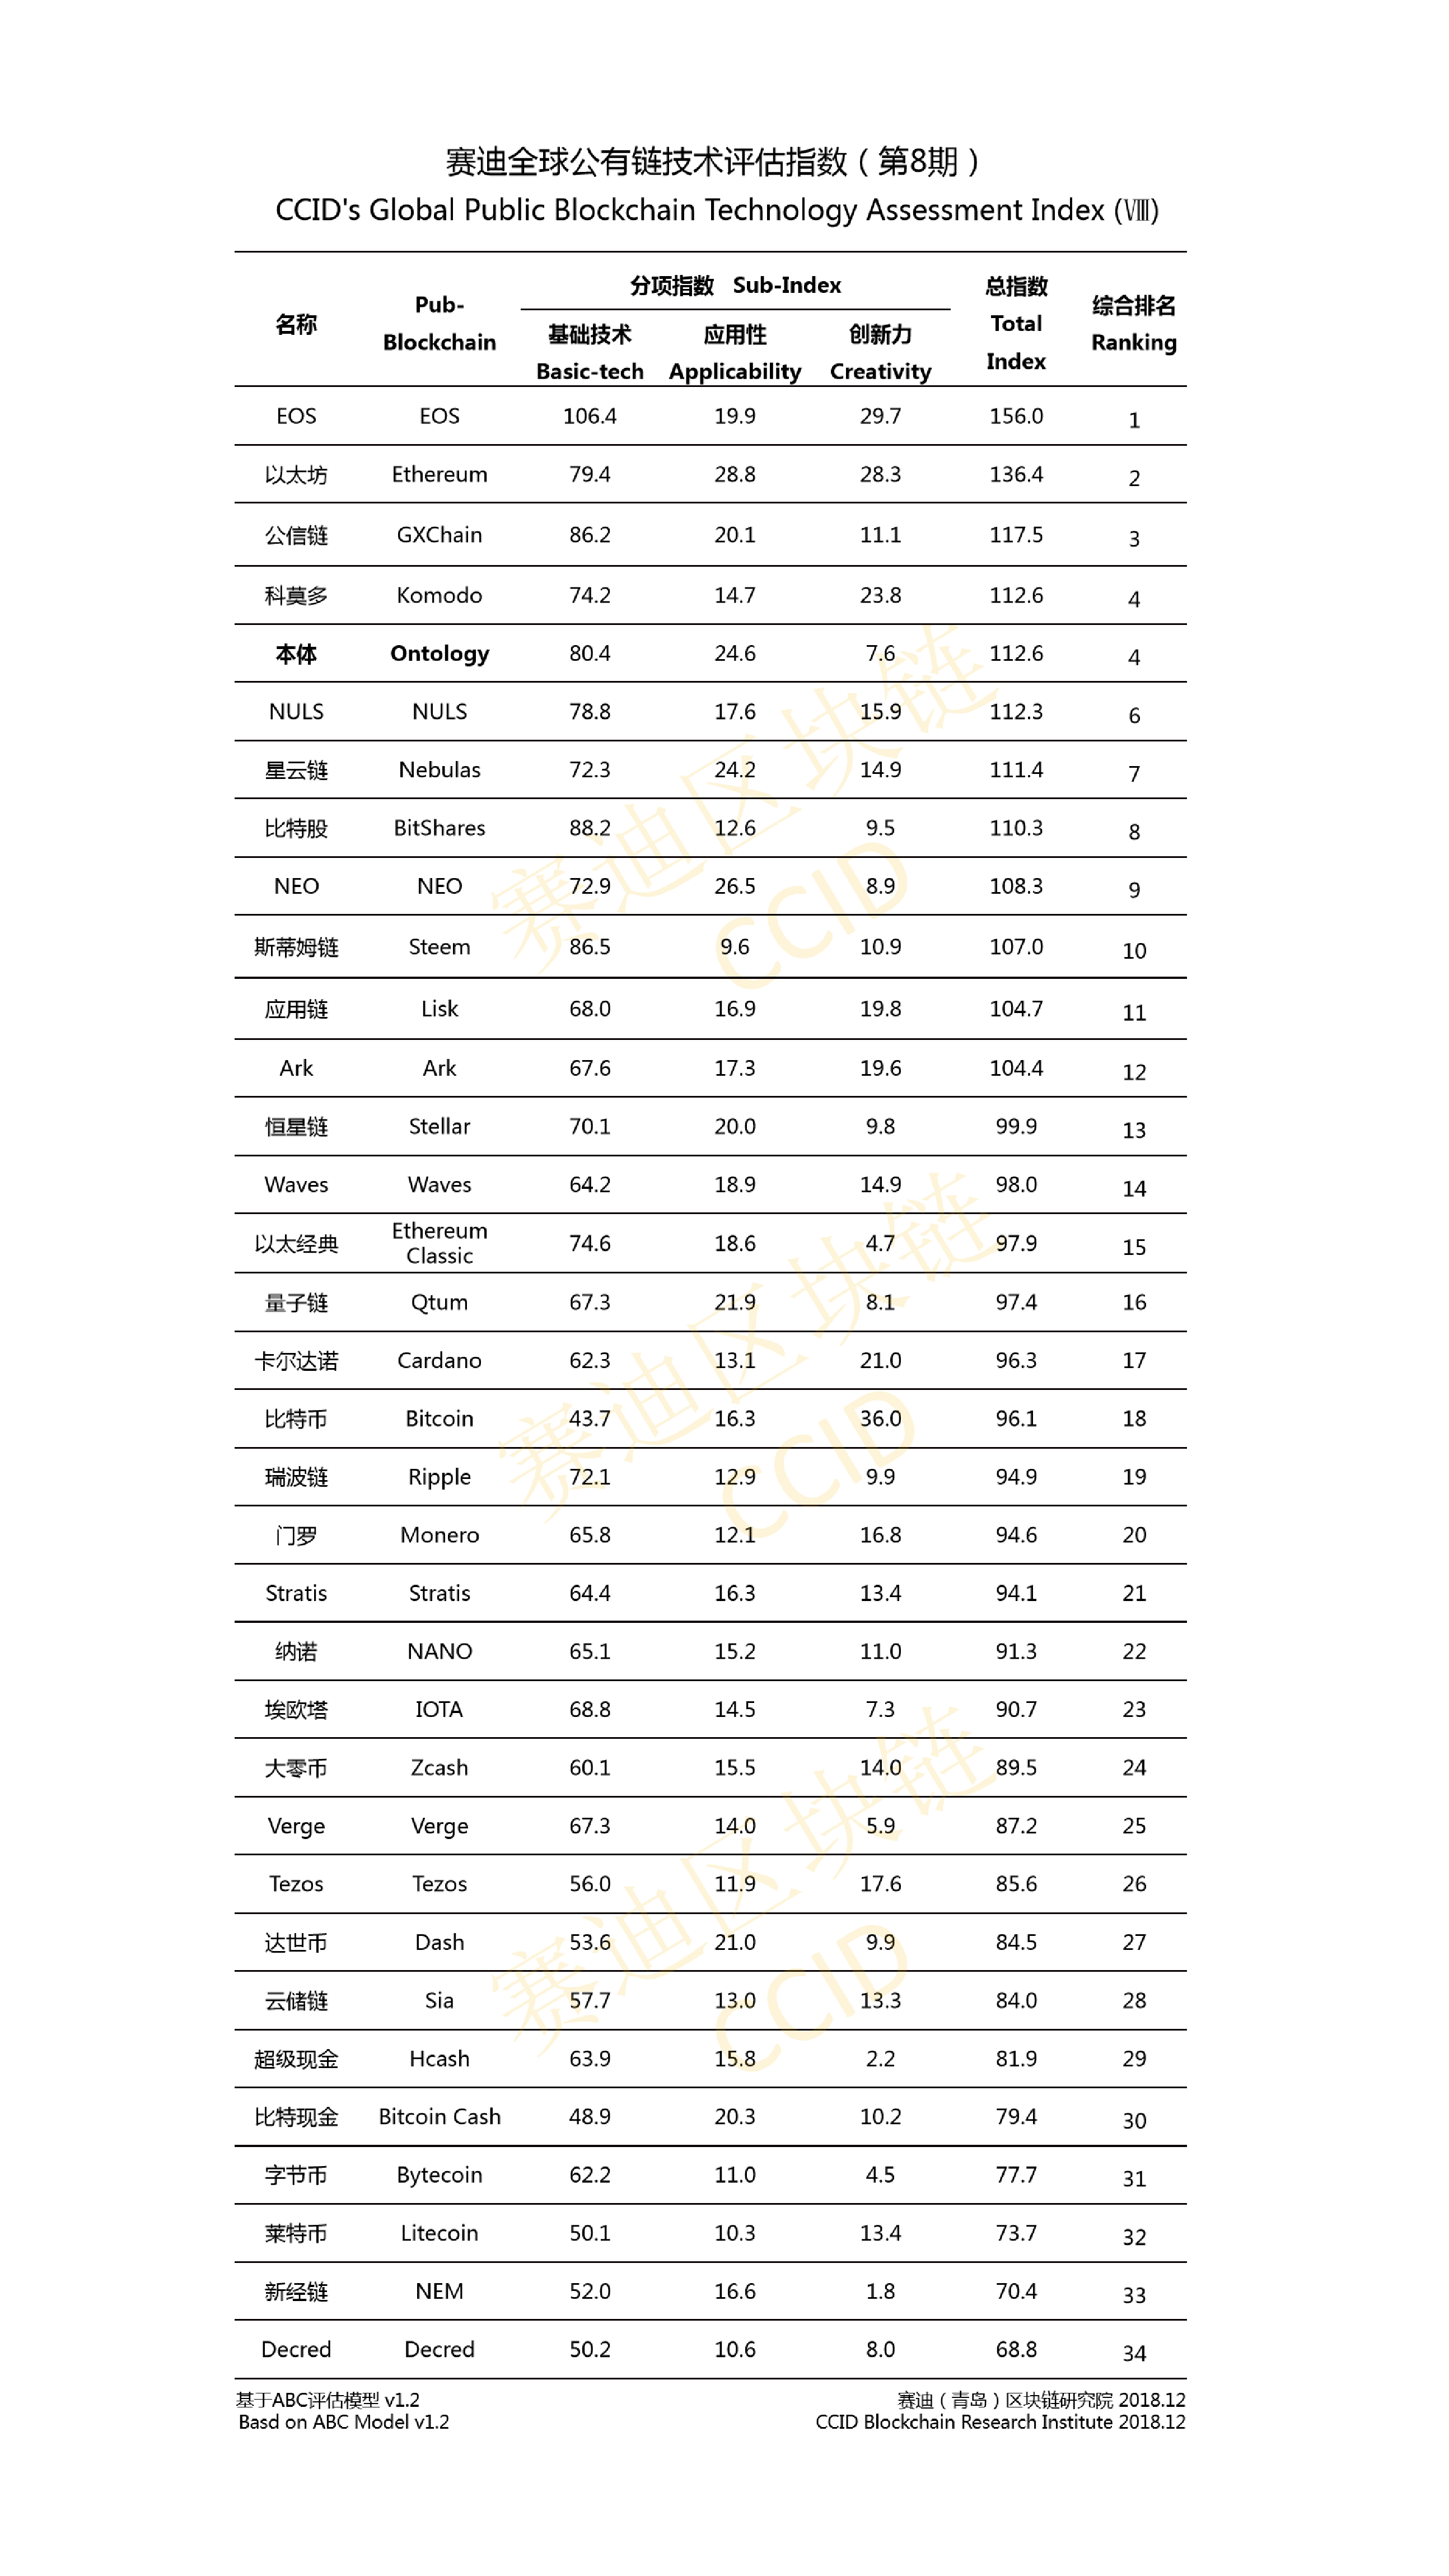 EOS Unbeaten. Remains 1st on China’s latest CCID Rank 16